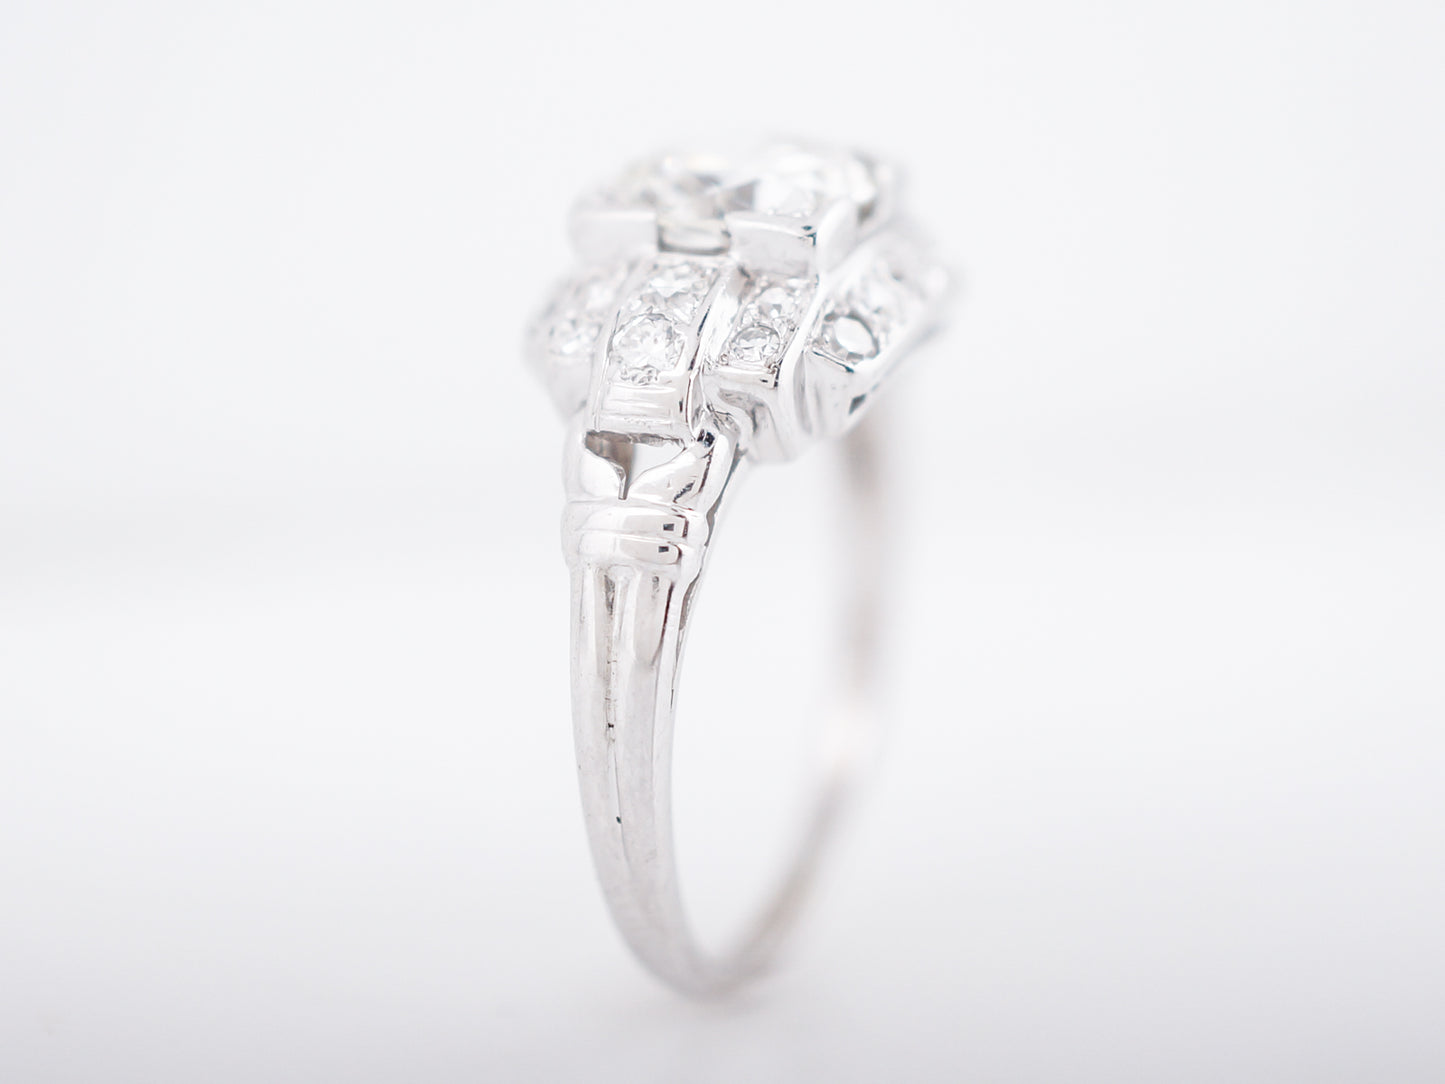 Antique Engagement Ring Art Deco .99 Round Brilliant Cut Diamond in 18k White Gold